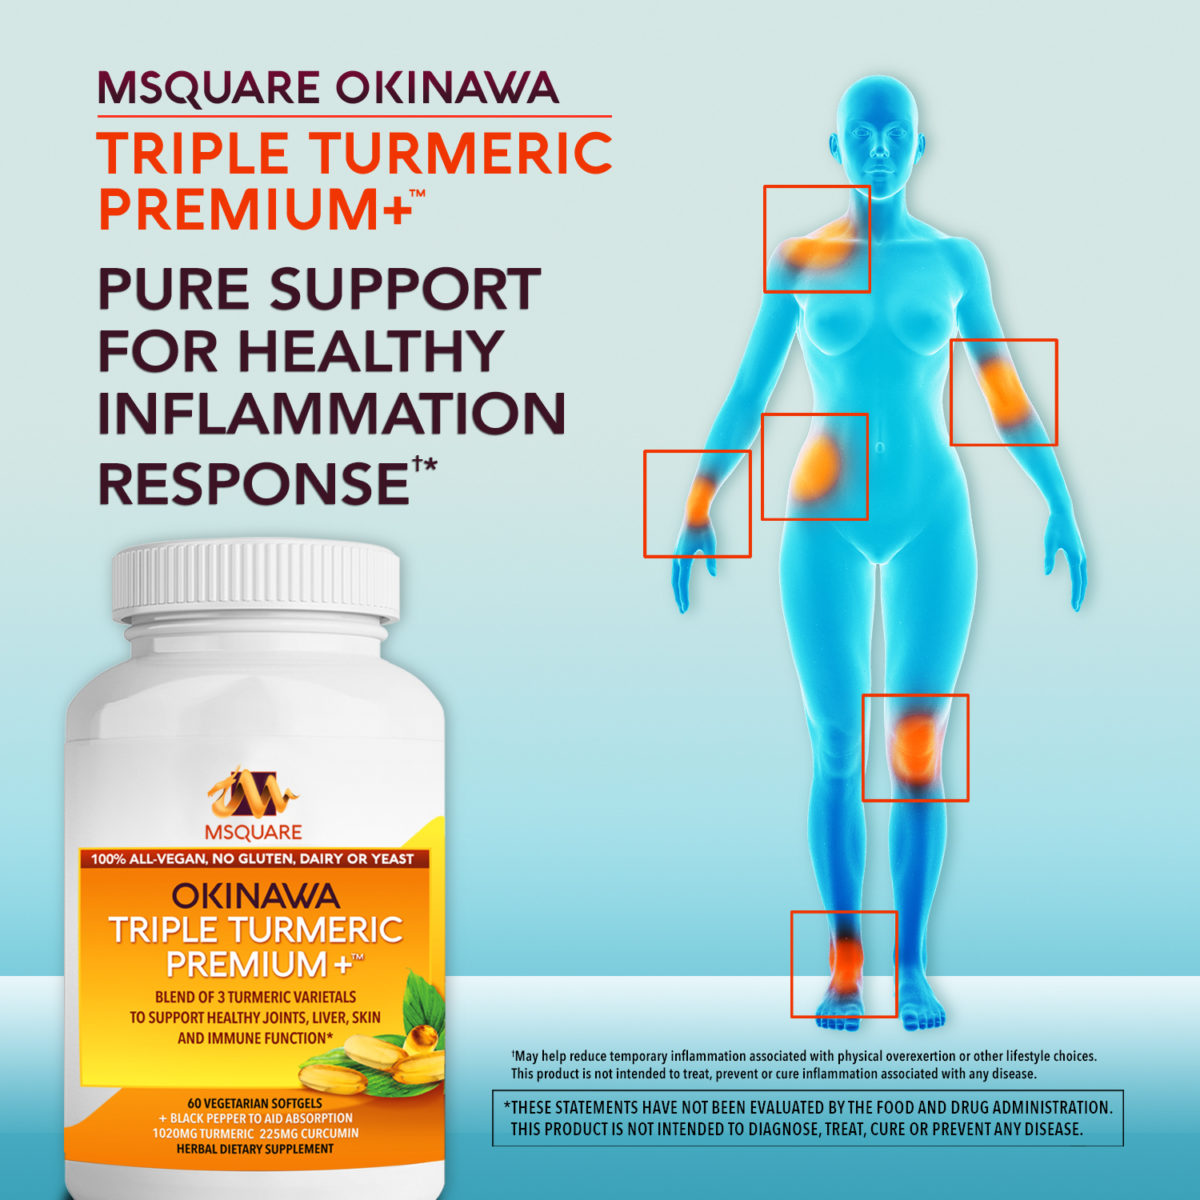 MSquare Okinawa Triple Turmeric Premium + Supports Joint Health